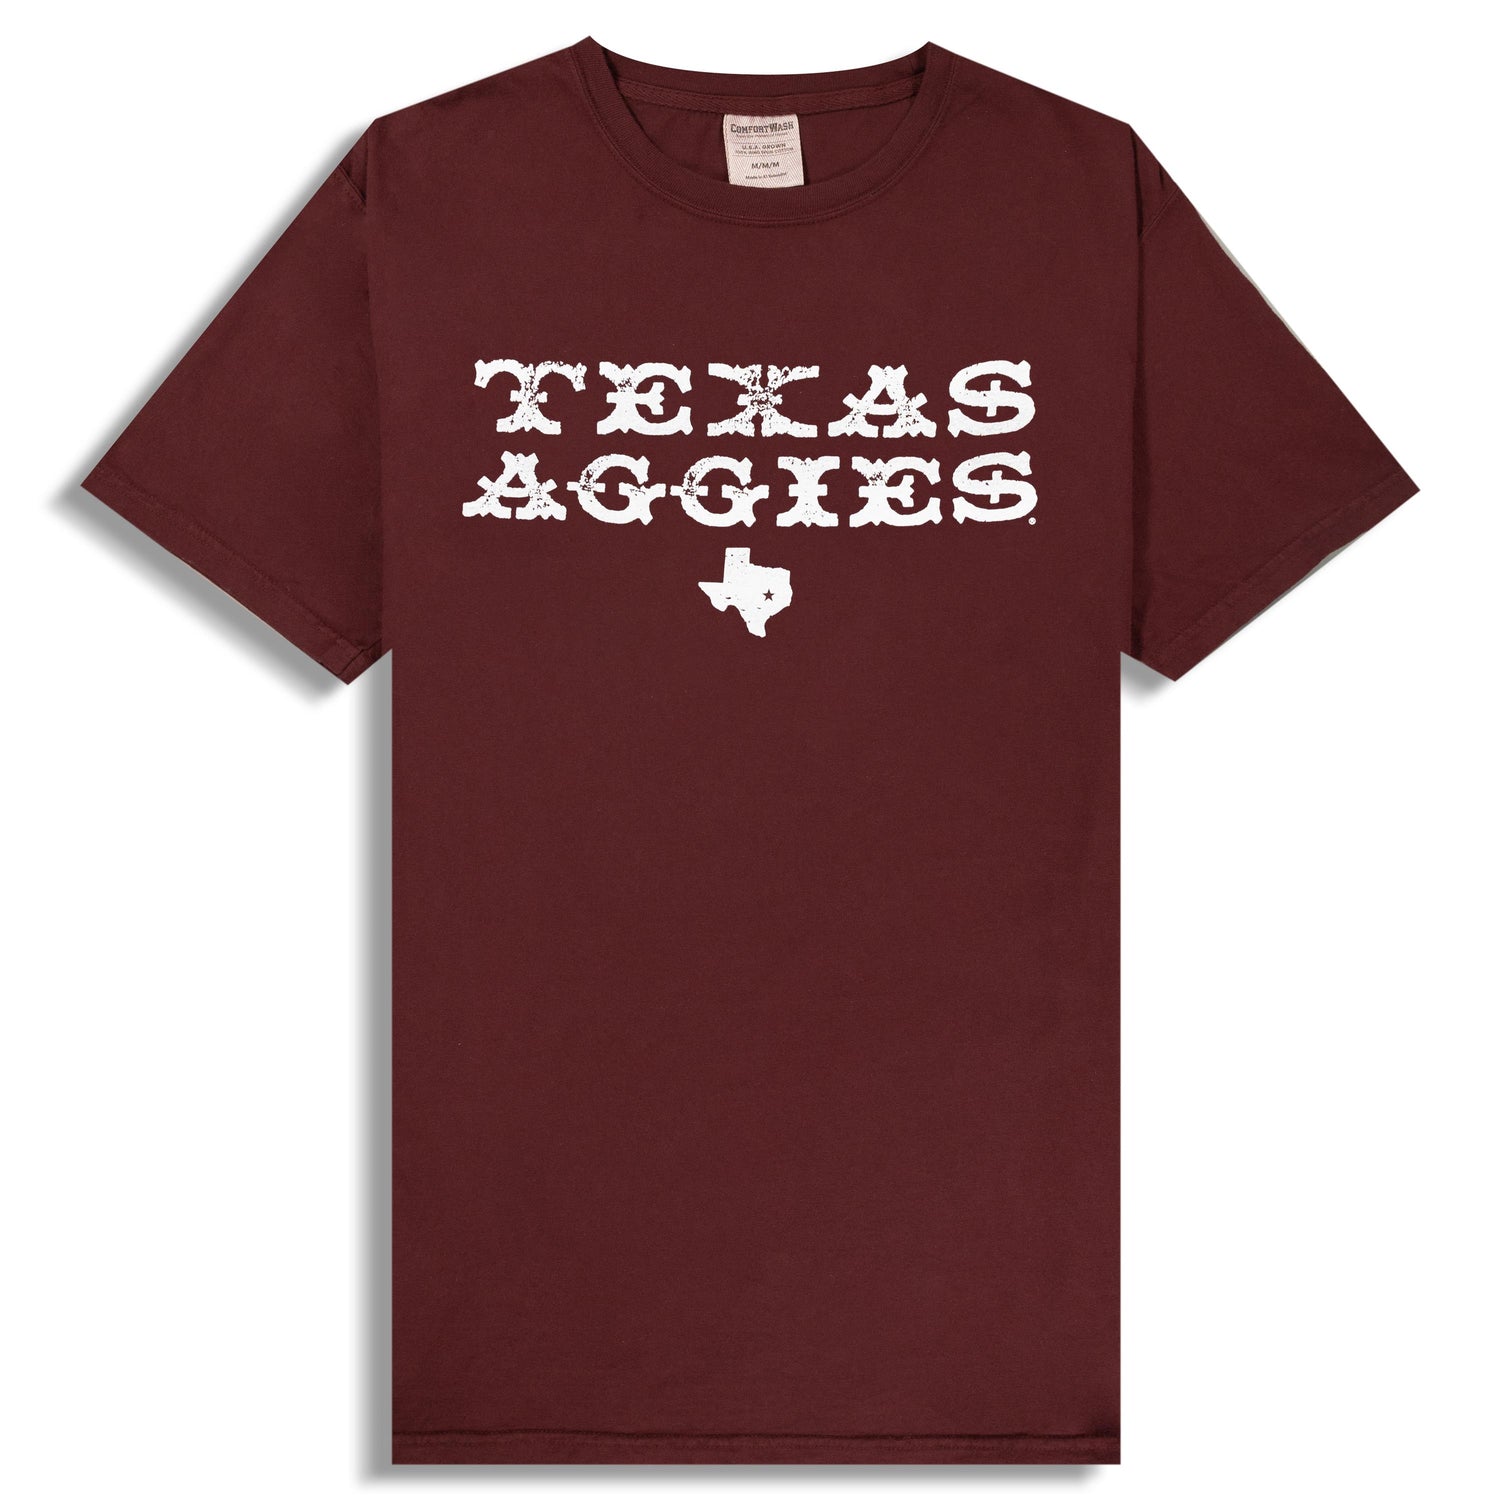 Western Texas Aggies